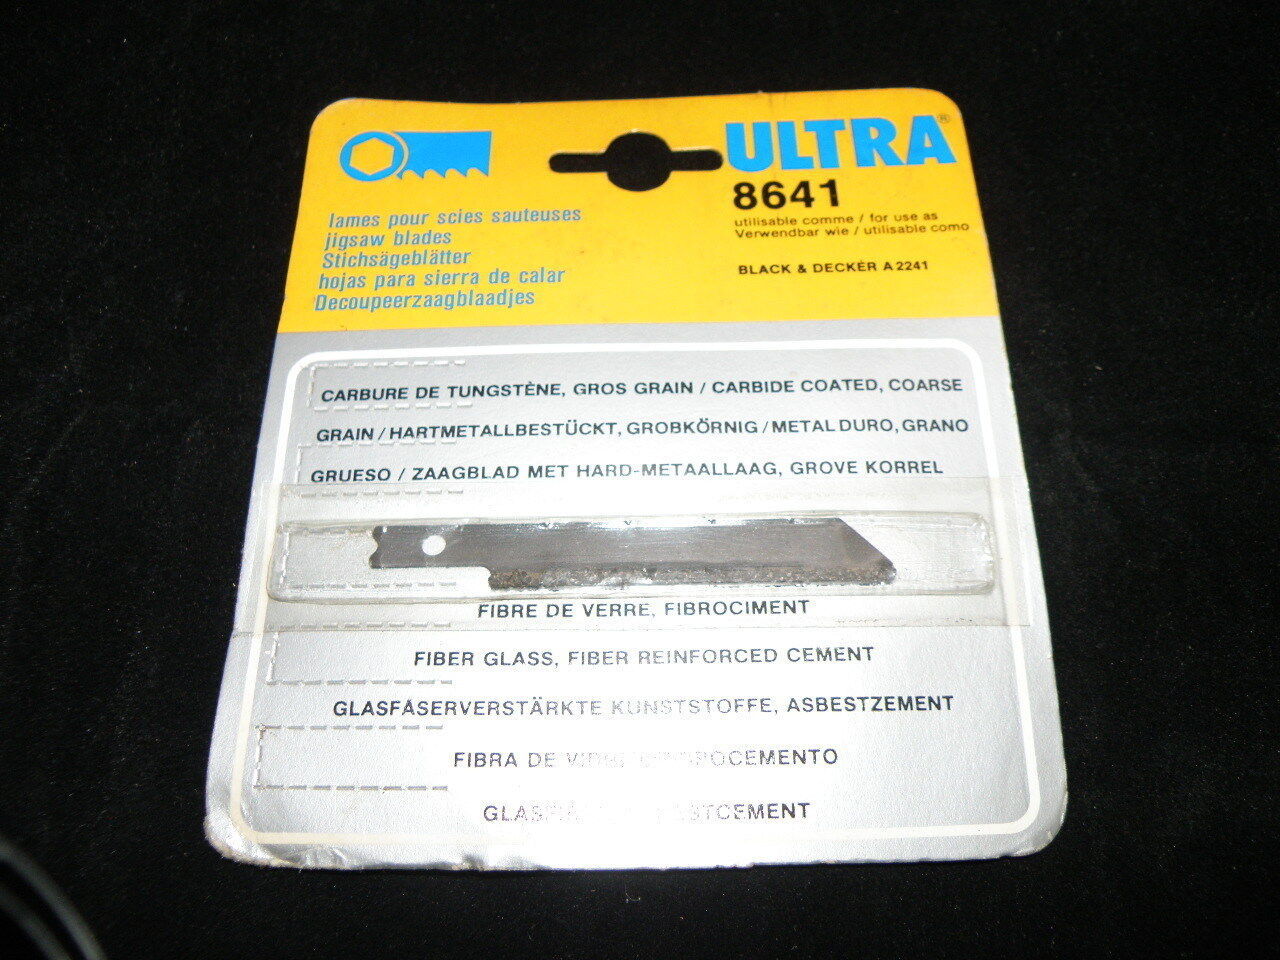 New Ultra 8641 Black & Decker A 2241 Jigsaw Blades *BNIB - $6.83